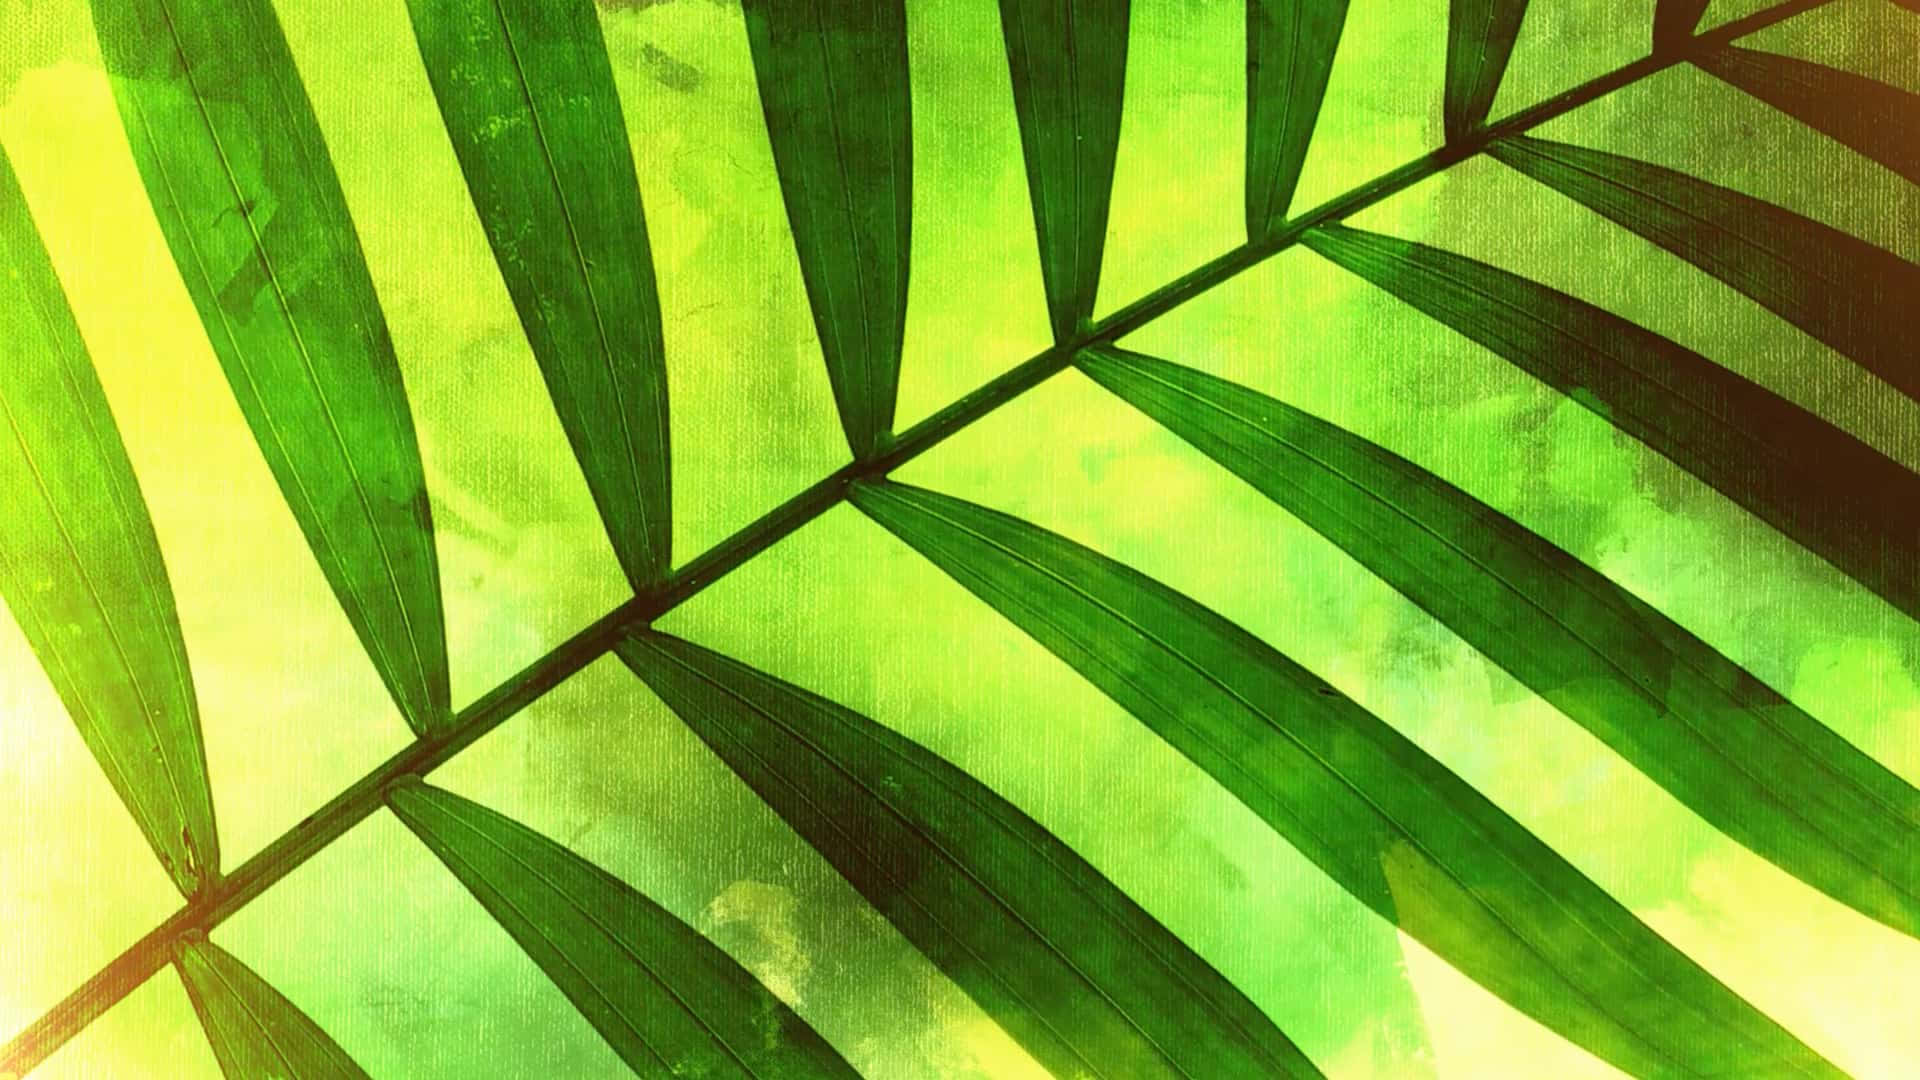 Pleasing Palm Leaf Image For Palm Sunday Background